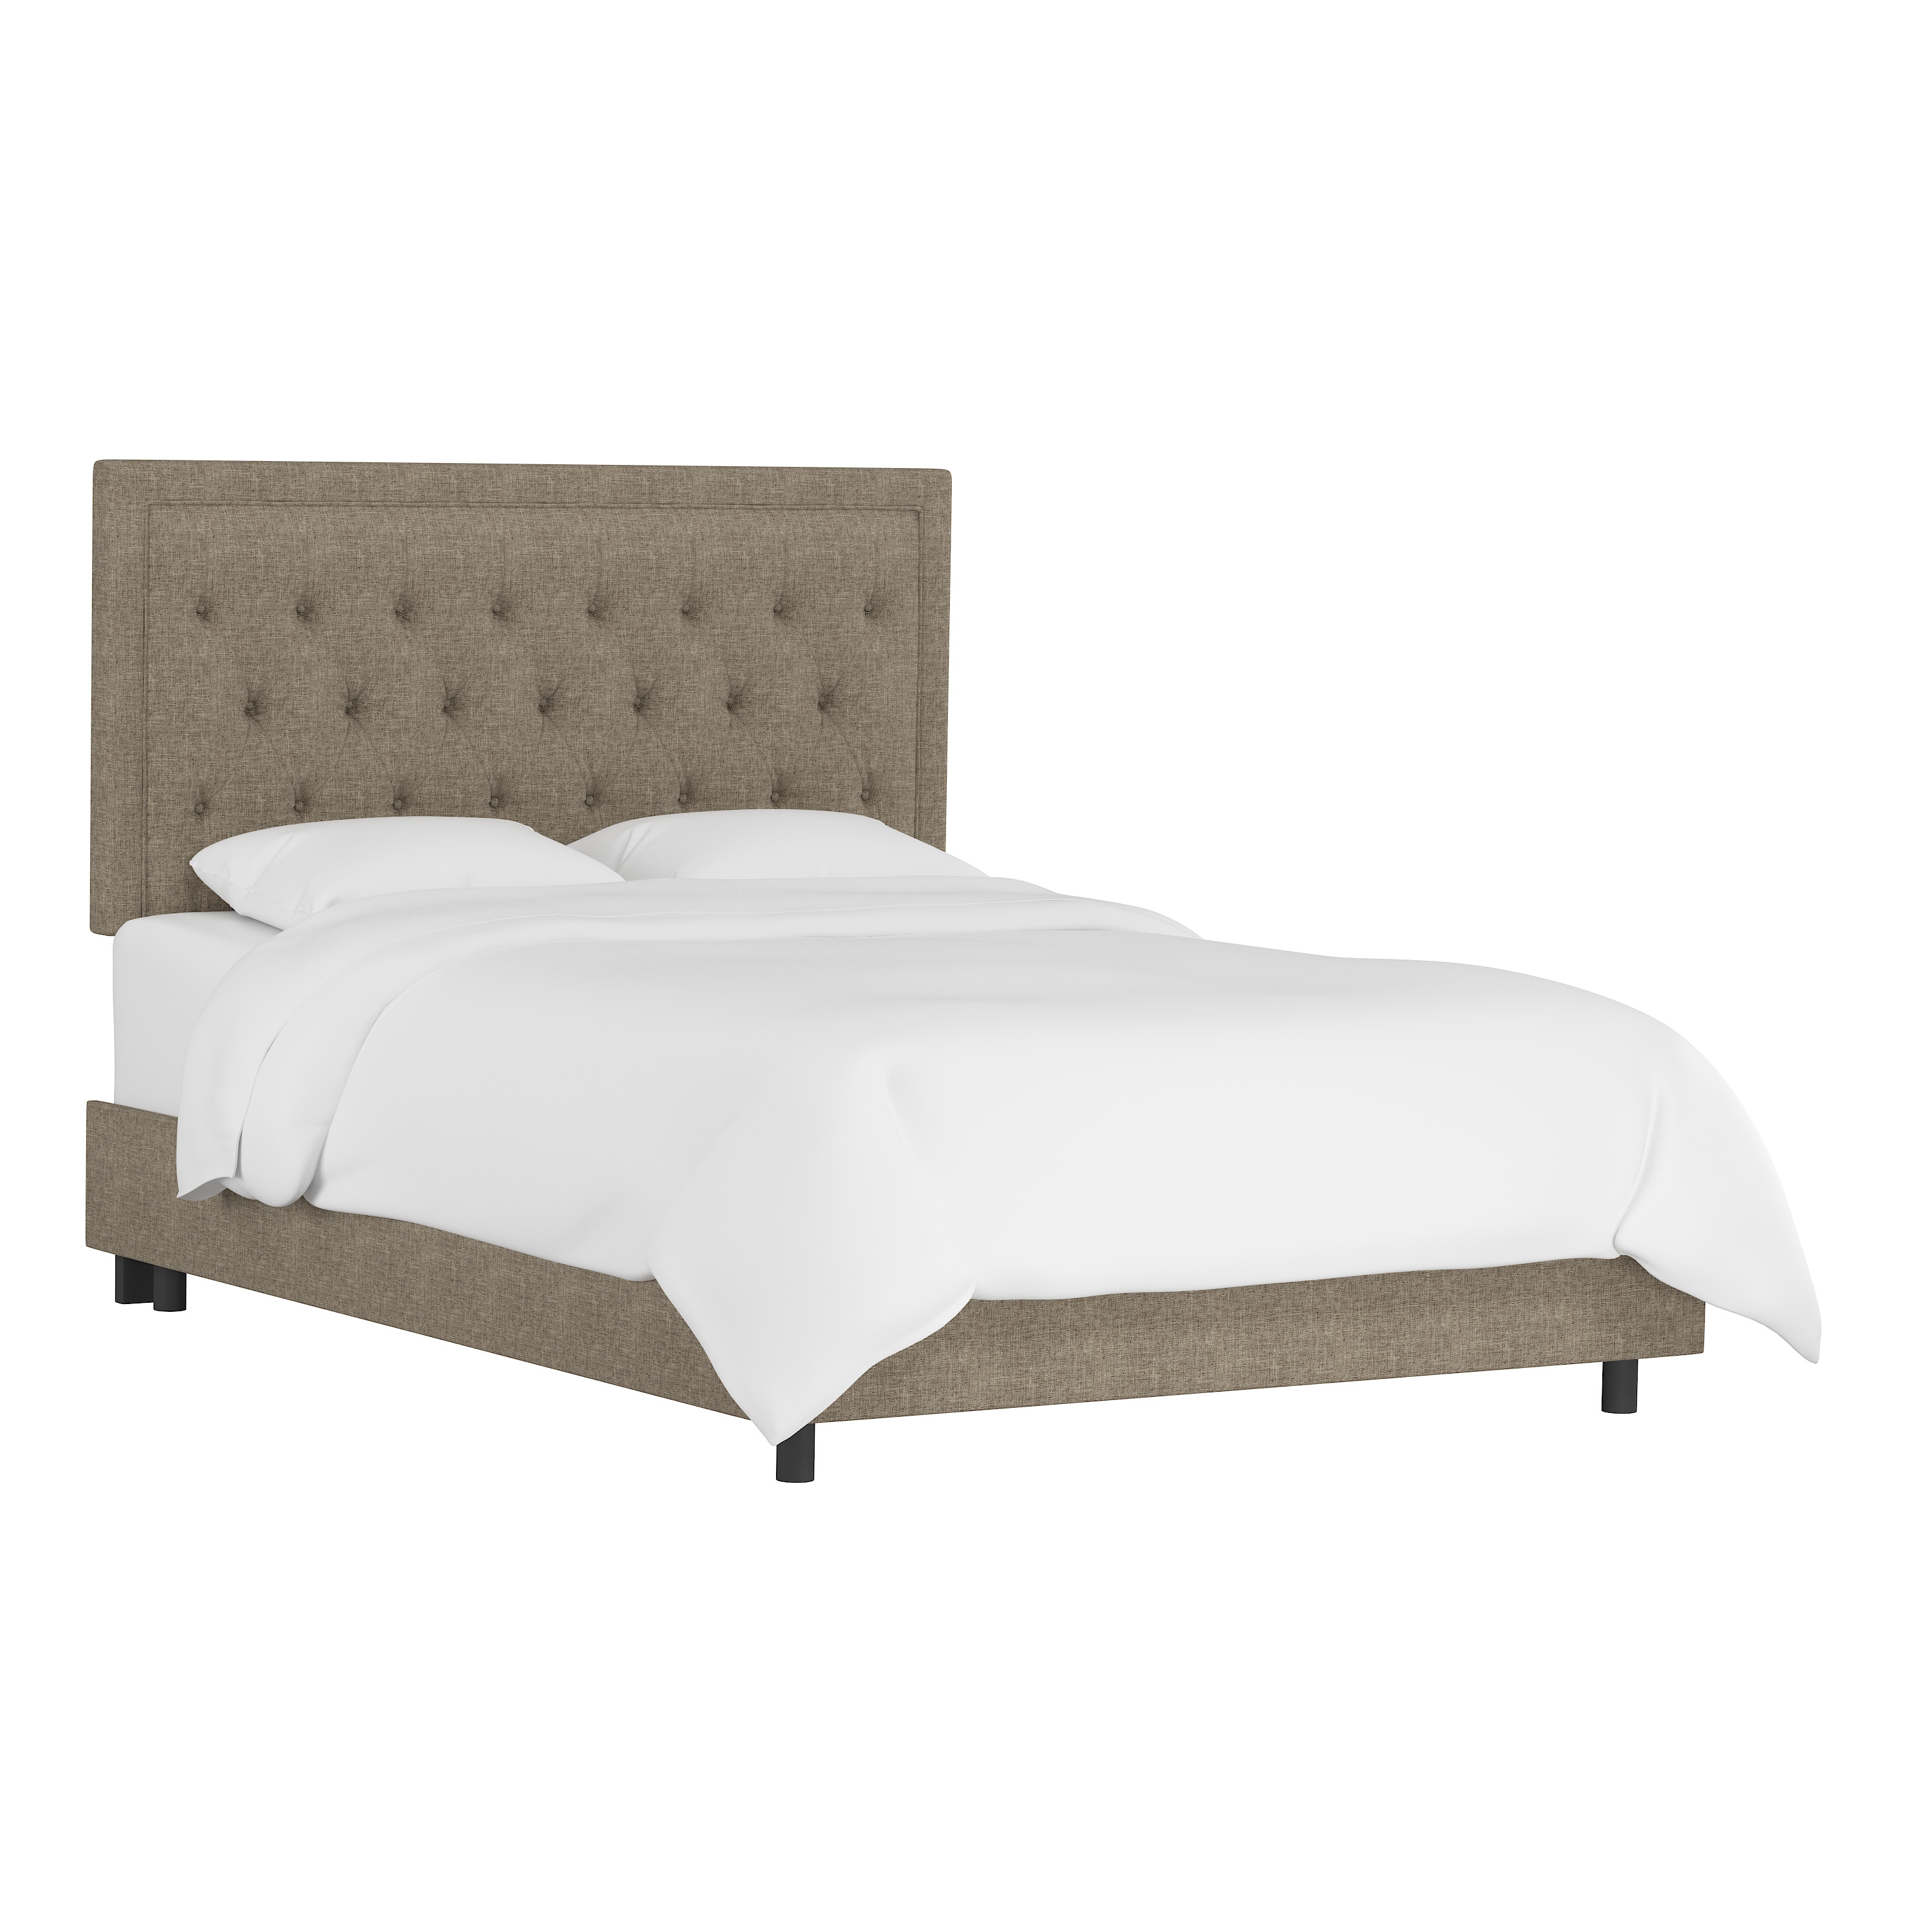 Lafayette Bed, King, Linen - Image 1